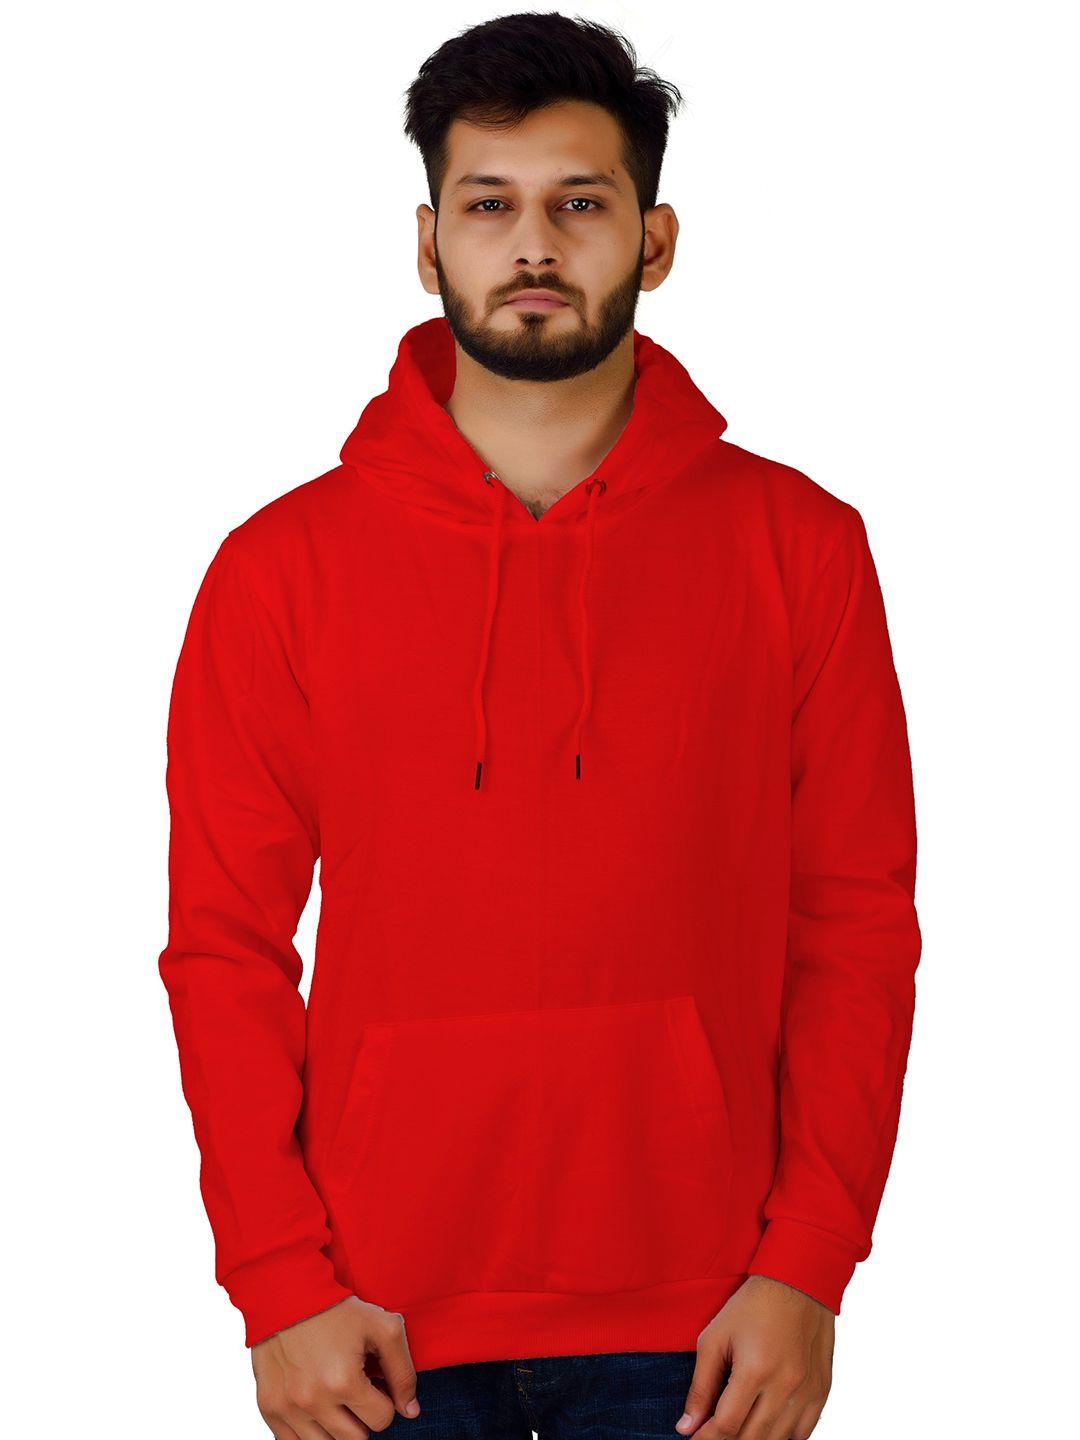 divra clothing unisex red hooded sweatshirt